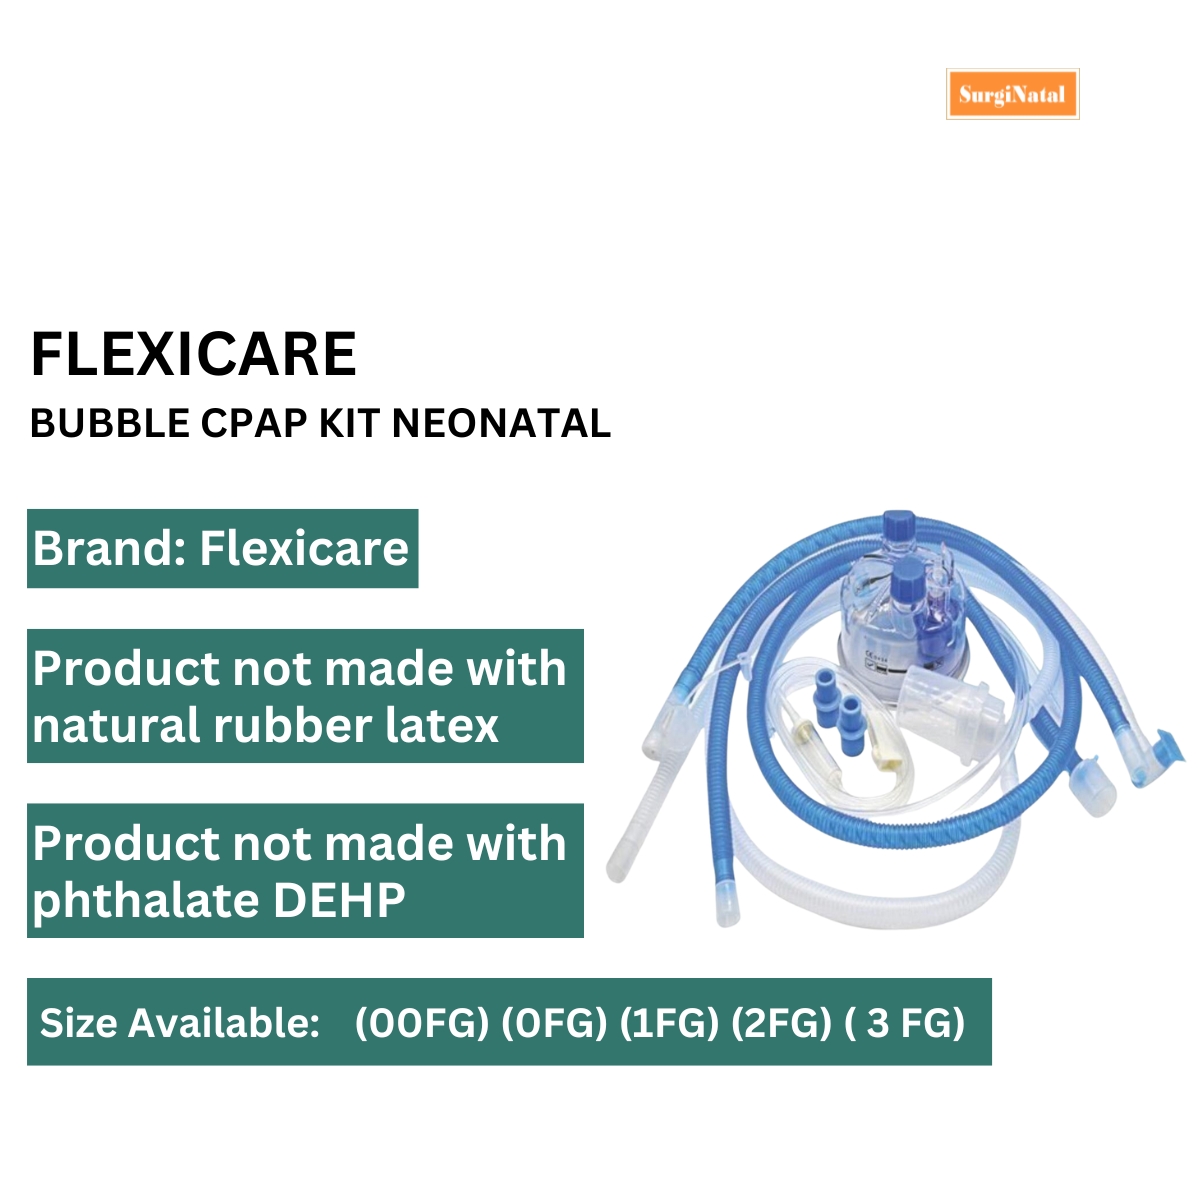 flexicare bubble cpap kit neonatal (bubble cpap system+nasal cpap kit)